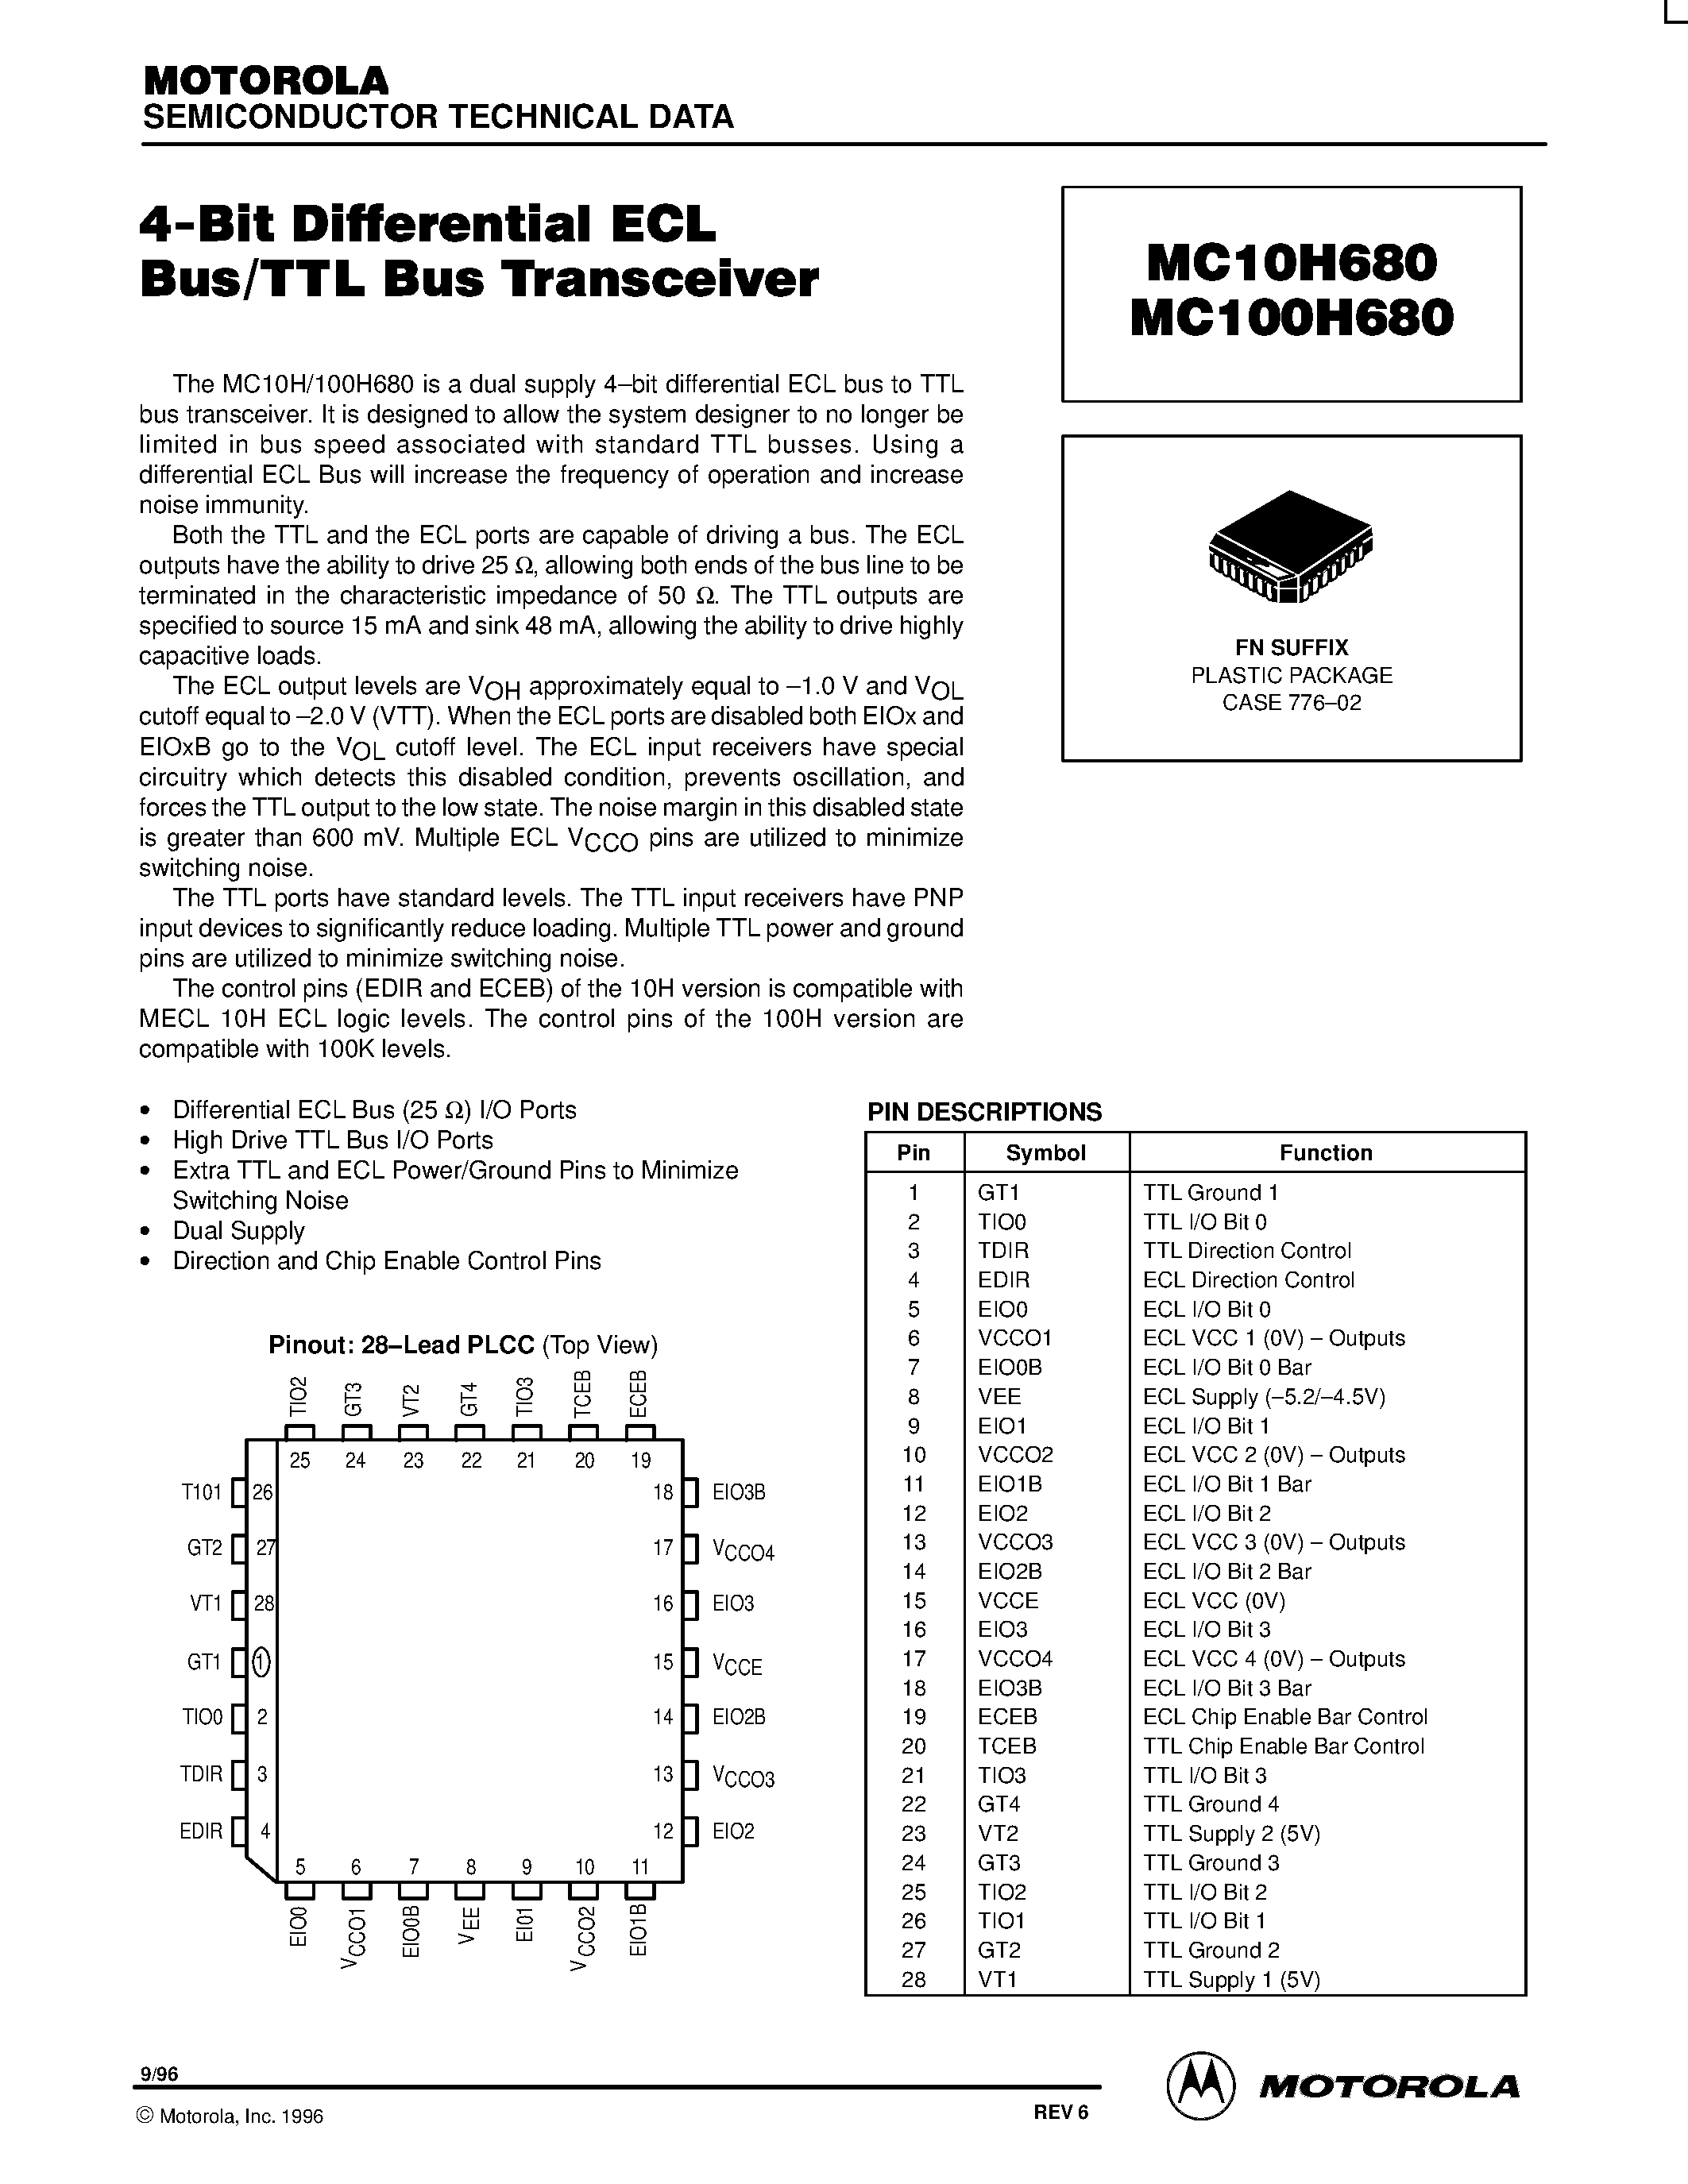 Datasheet MC10H680FN - 4-Bit Differential ECL Bus/TTL Bus Transceiver page 1